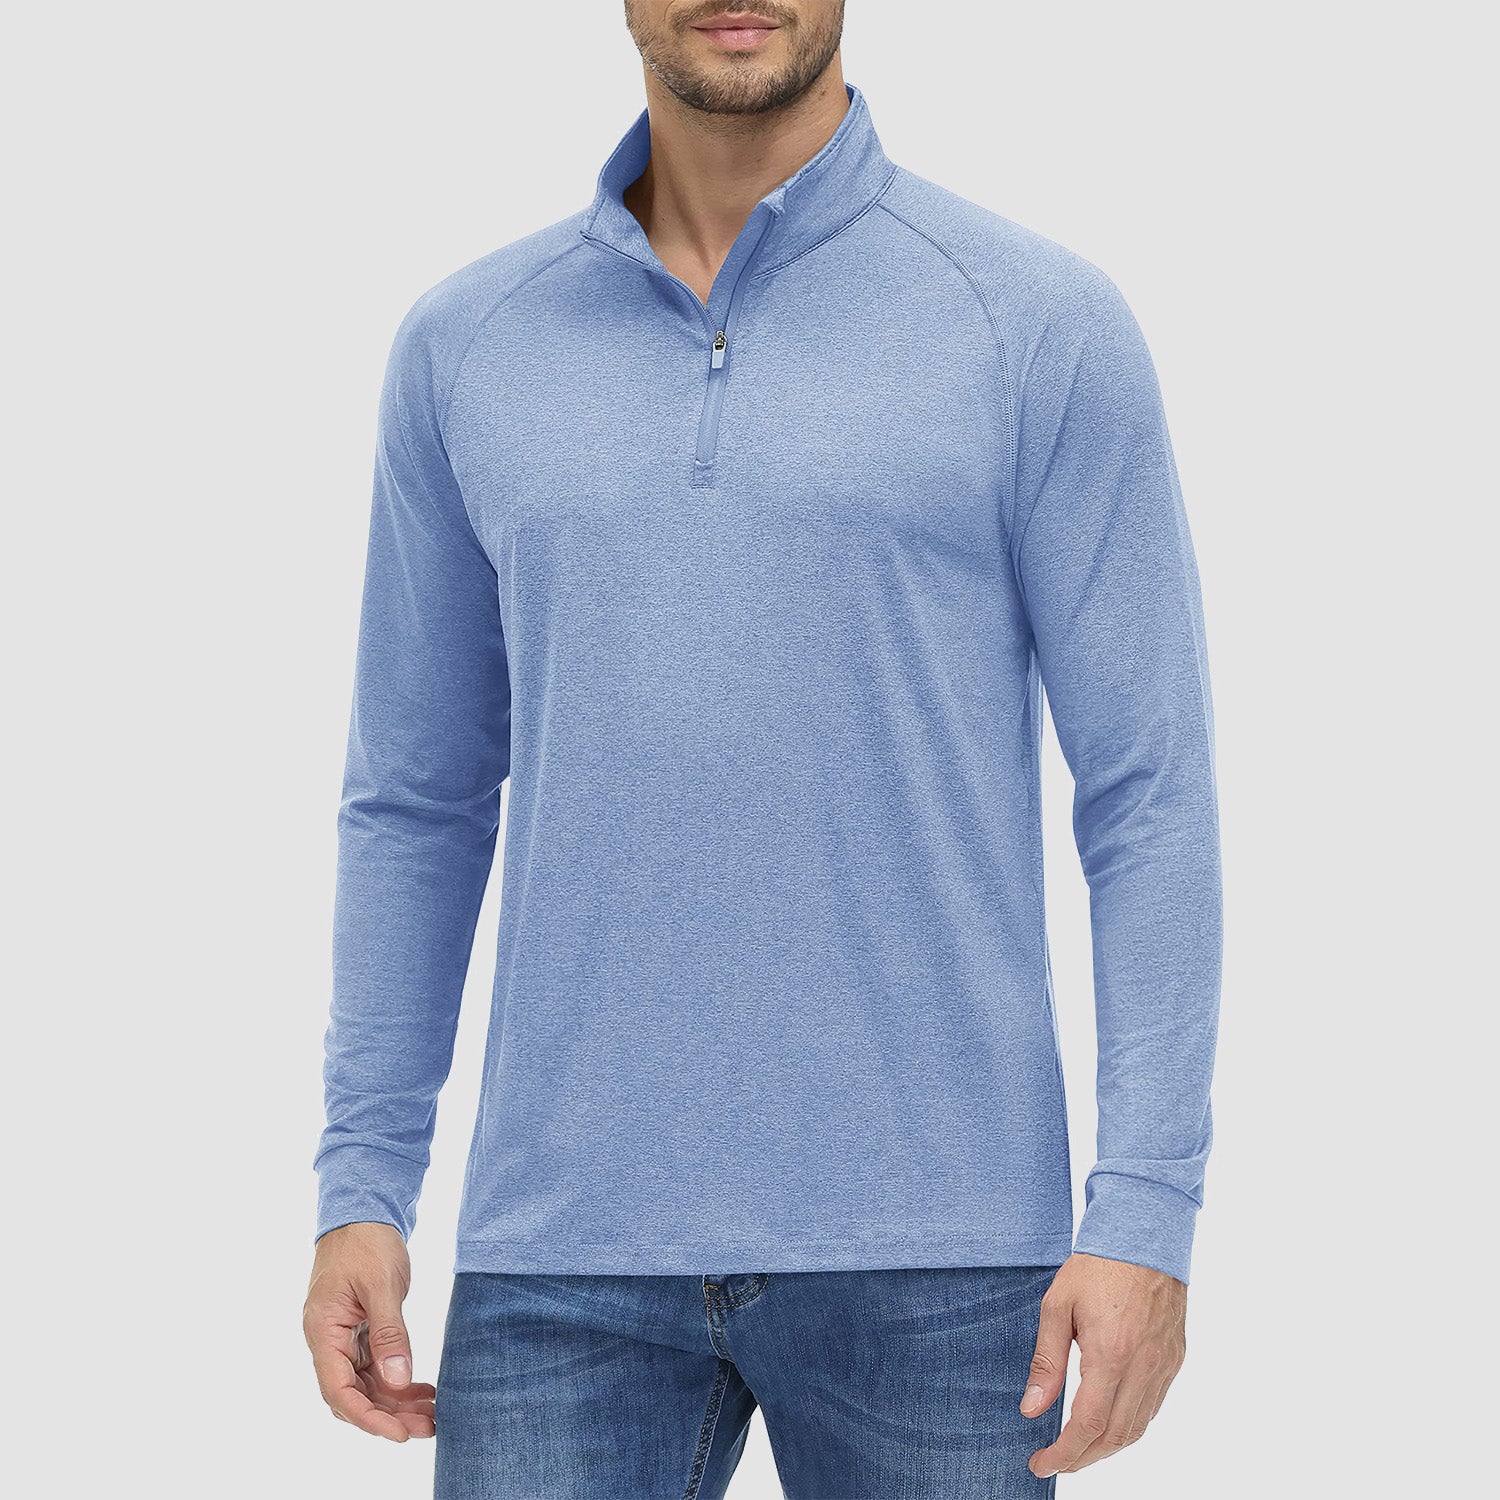 Men's 1/4 Zip Long Sleeve Polo Shirt UPF 50+ Quick Dry Shirt, Pink / XL